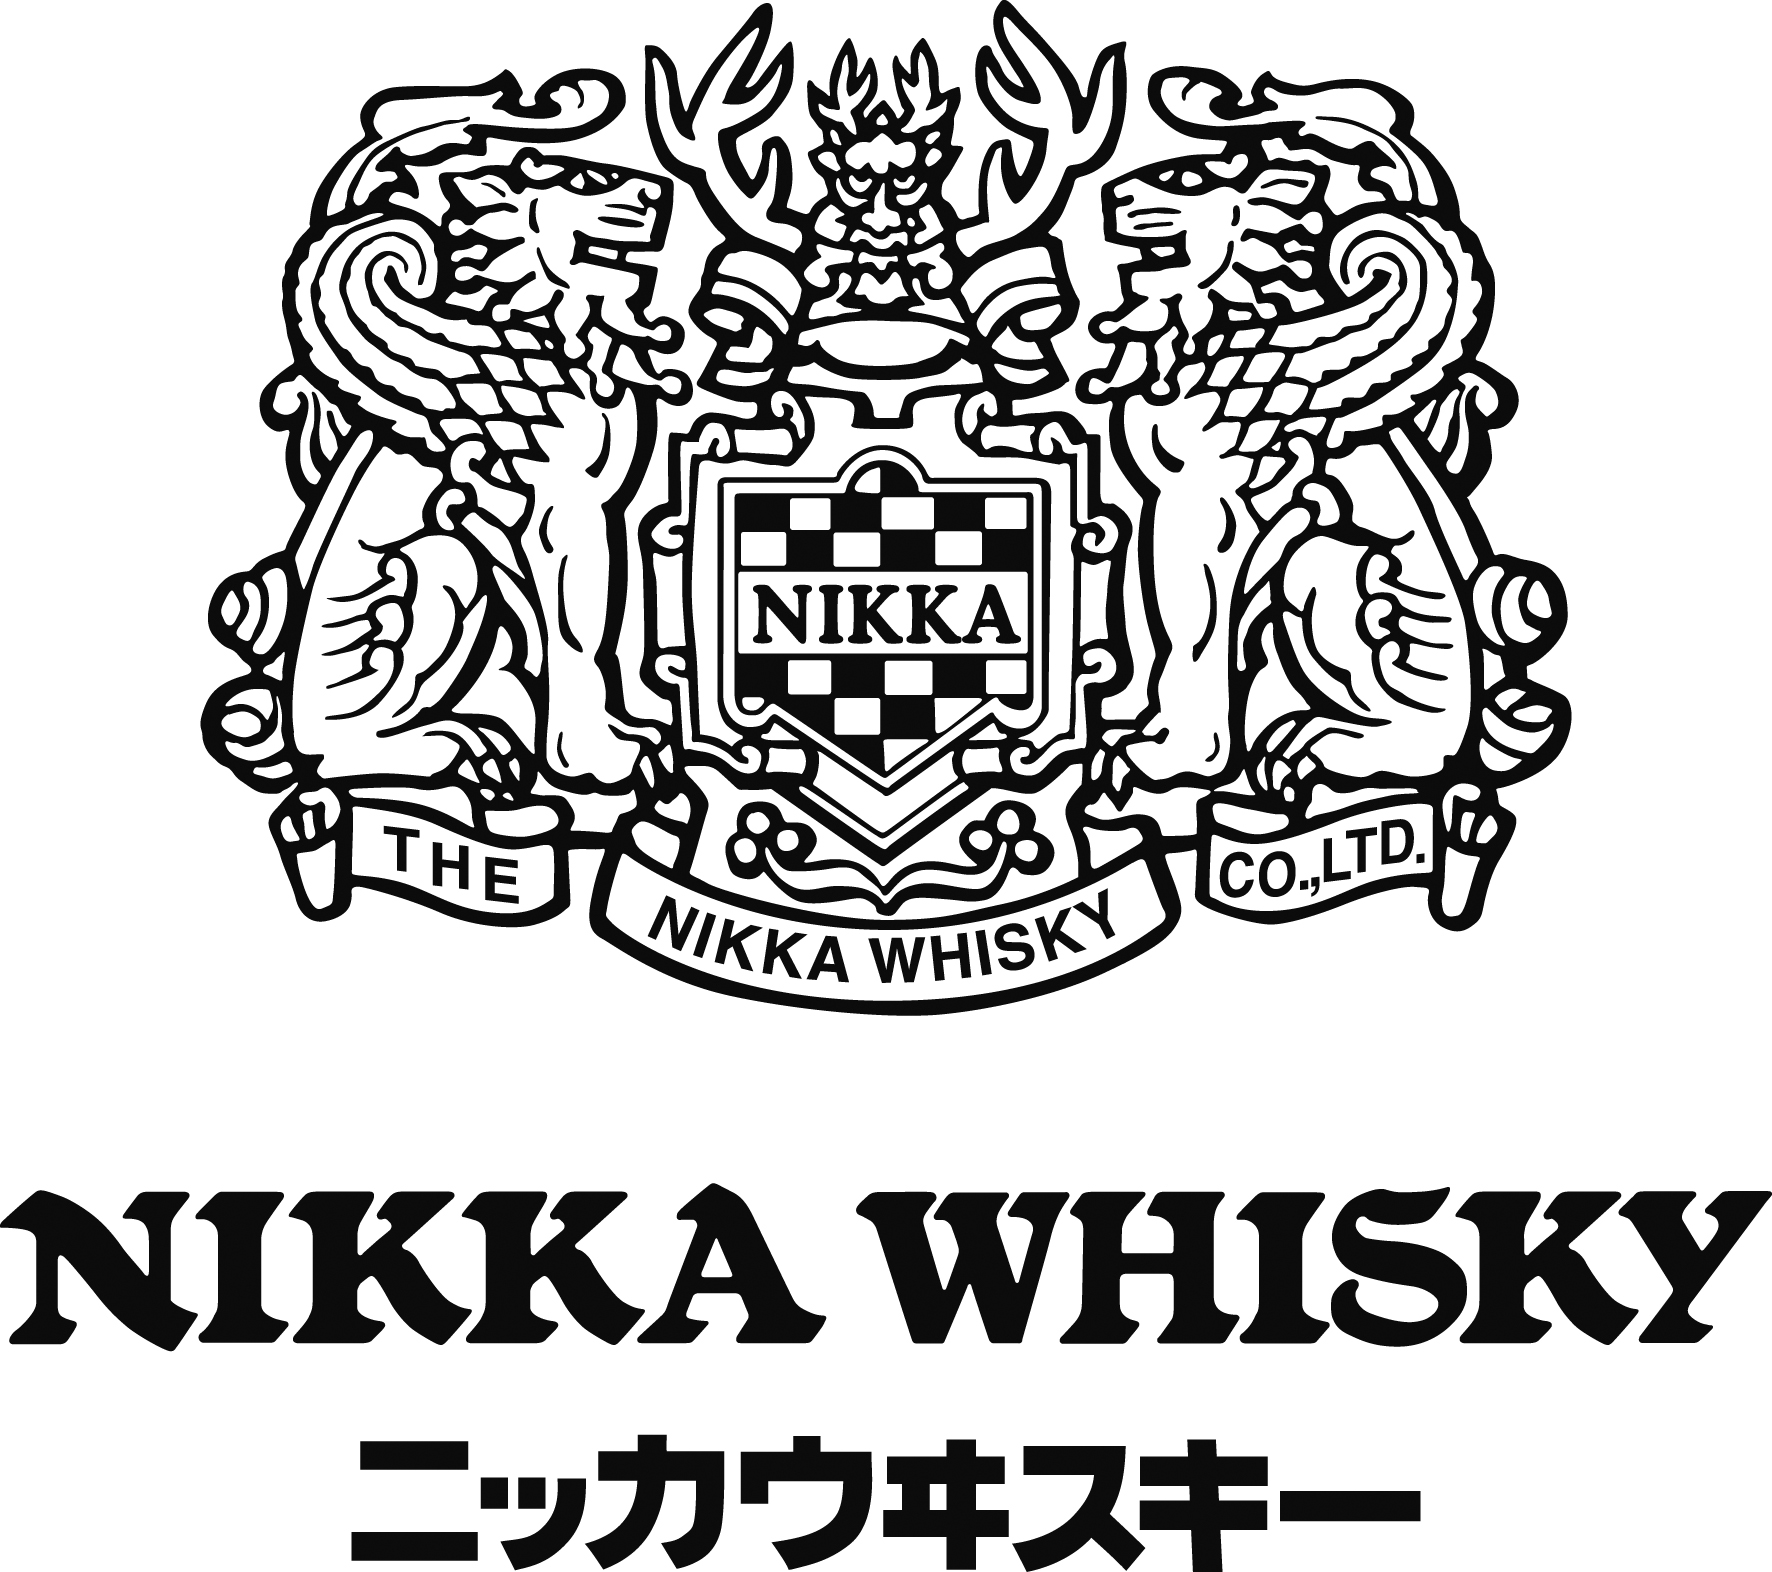 Nikka Whisky